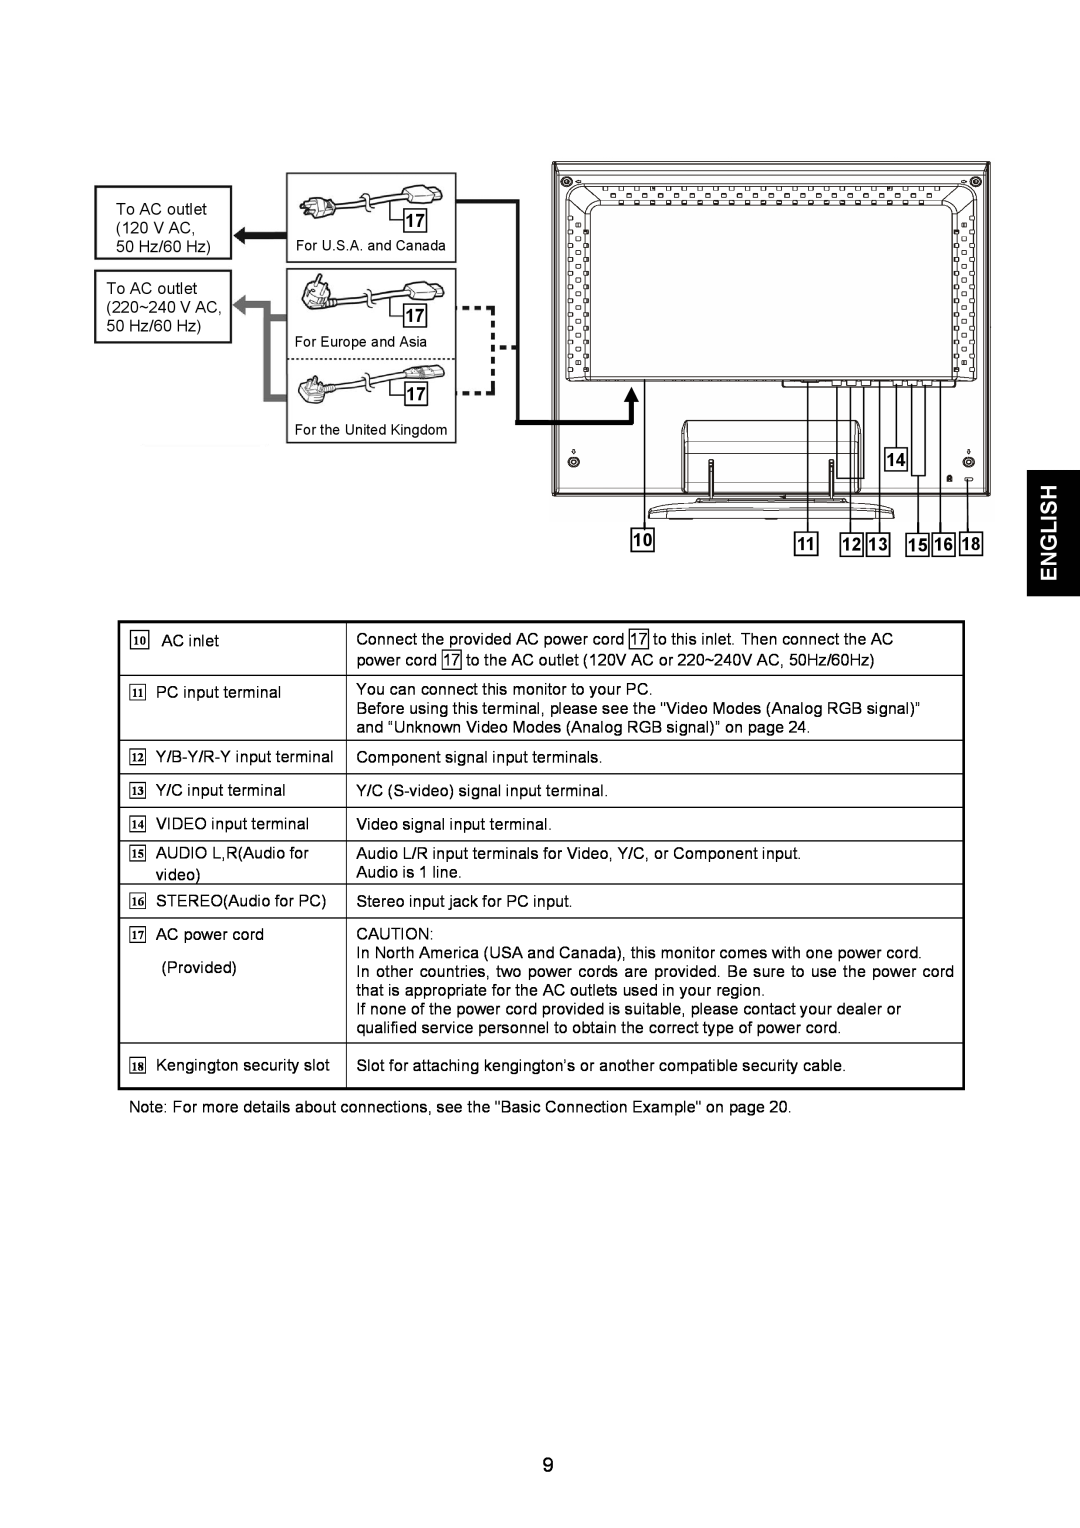 JVC GD-19L1G, GD-17L1G manual 111213151618, English, To AC outlet 120 V AC, 50 Hz/60 Hz 